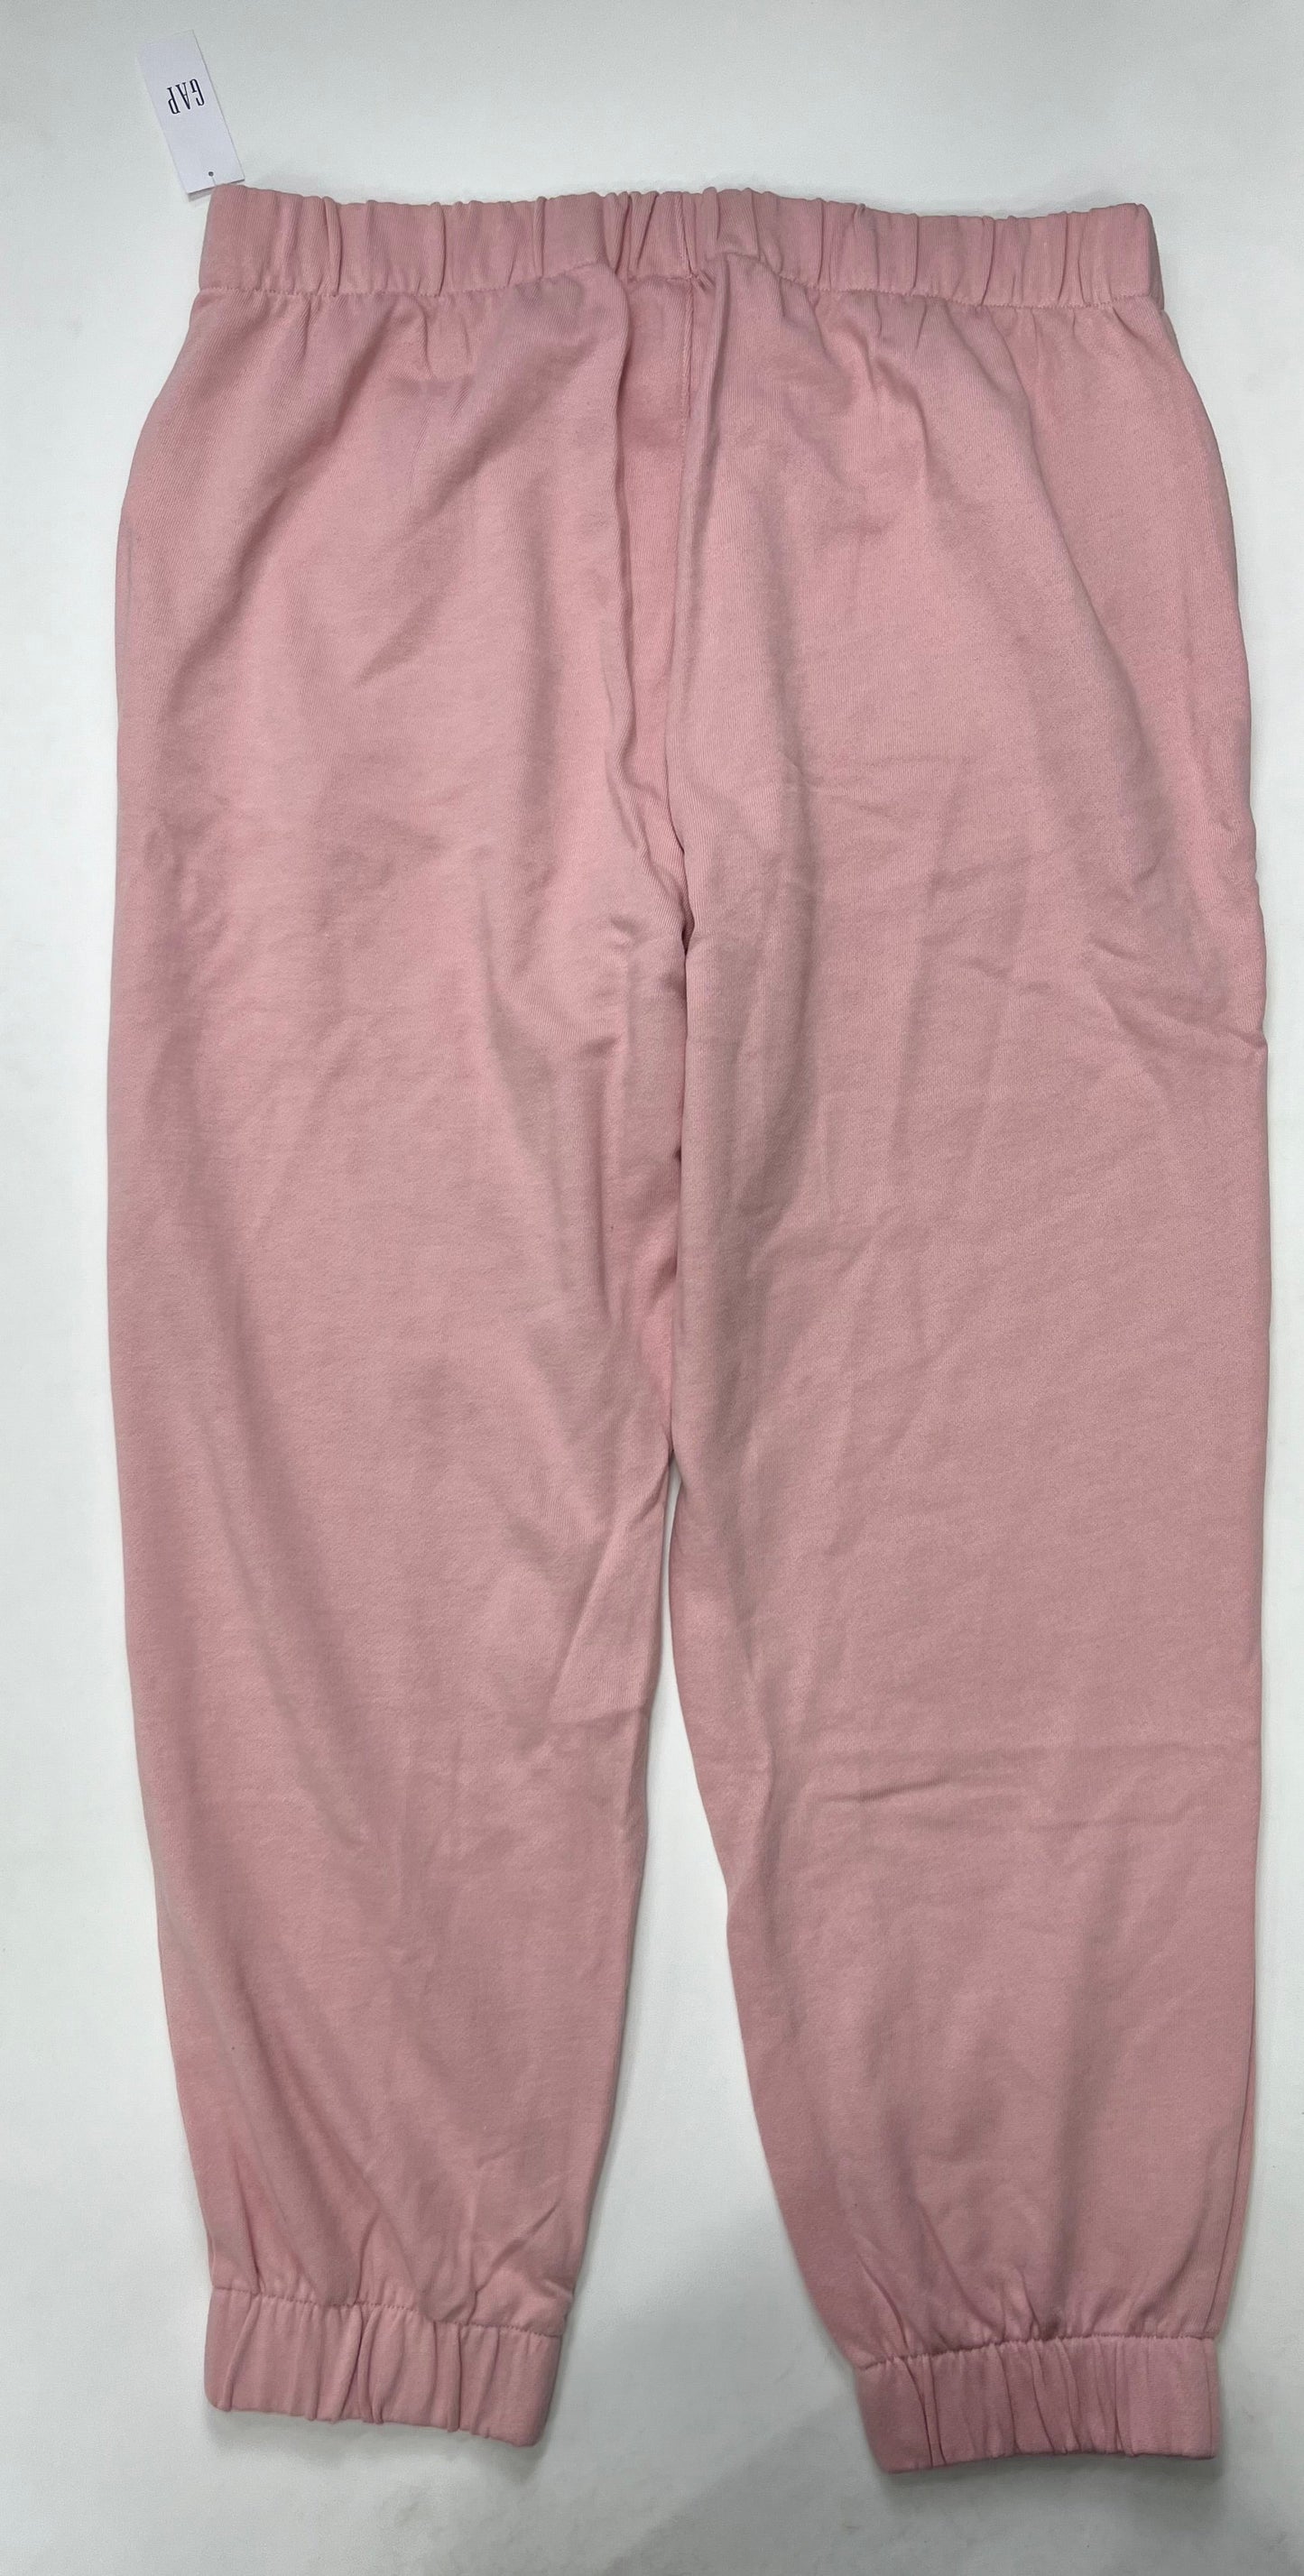 Pink Athletic Pants Gap, Size Xl